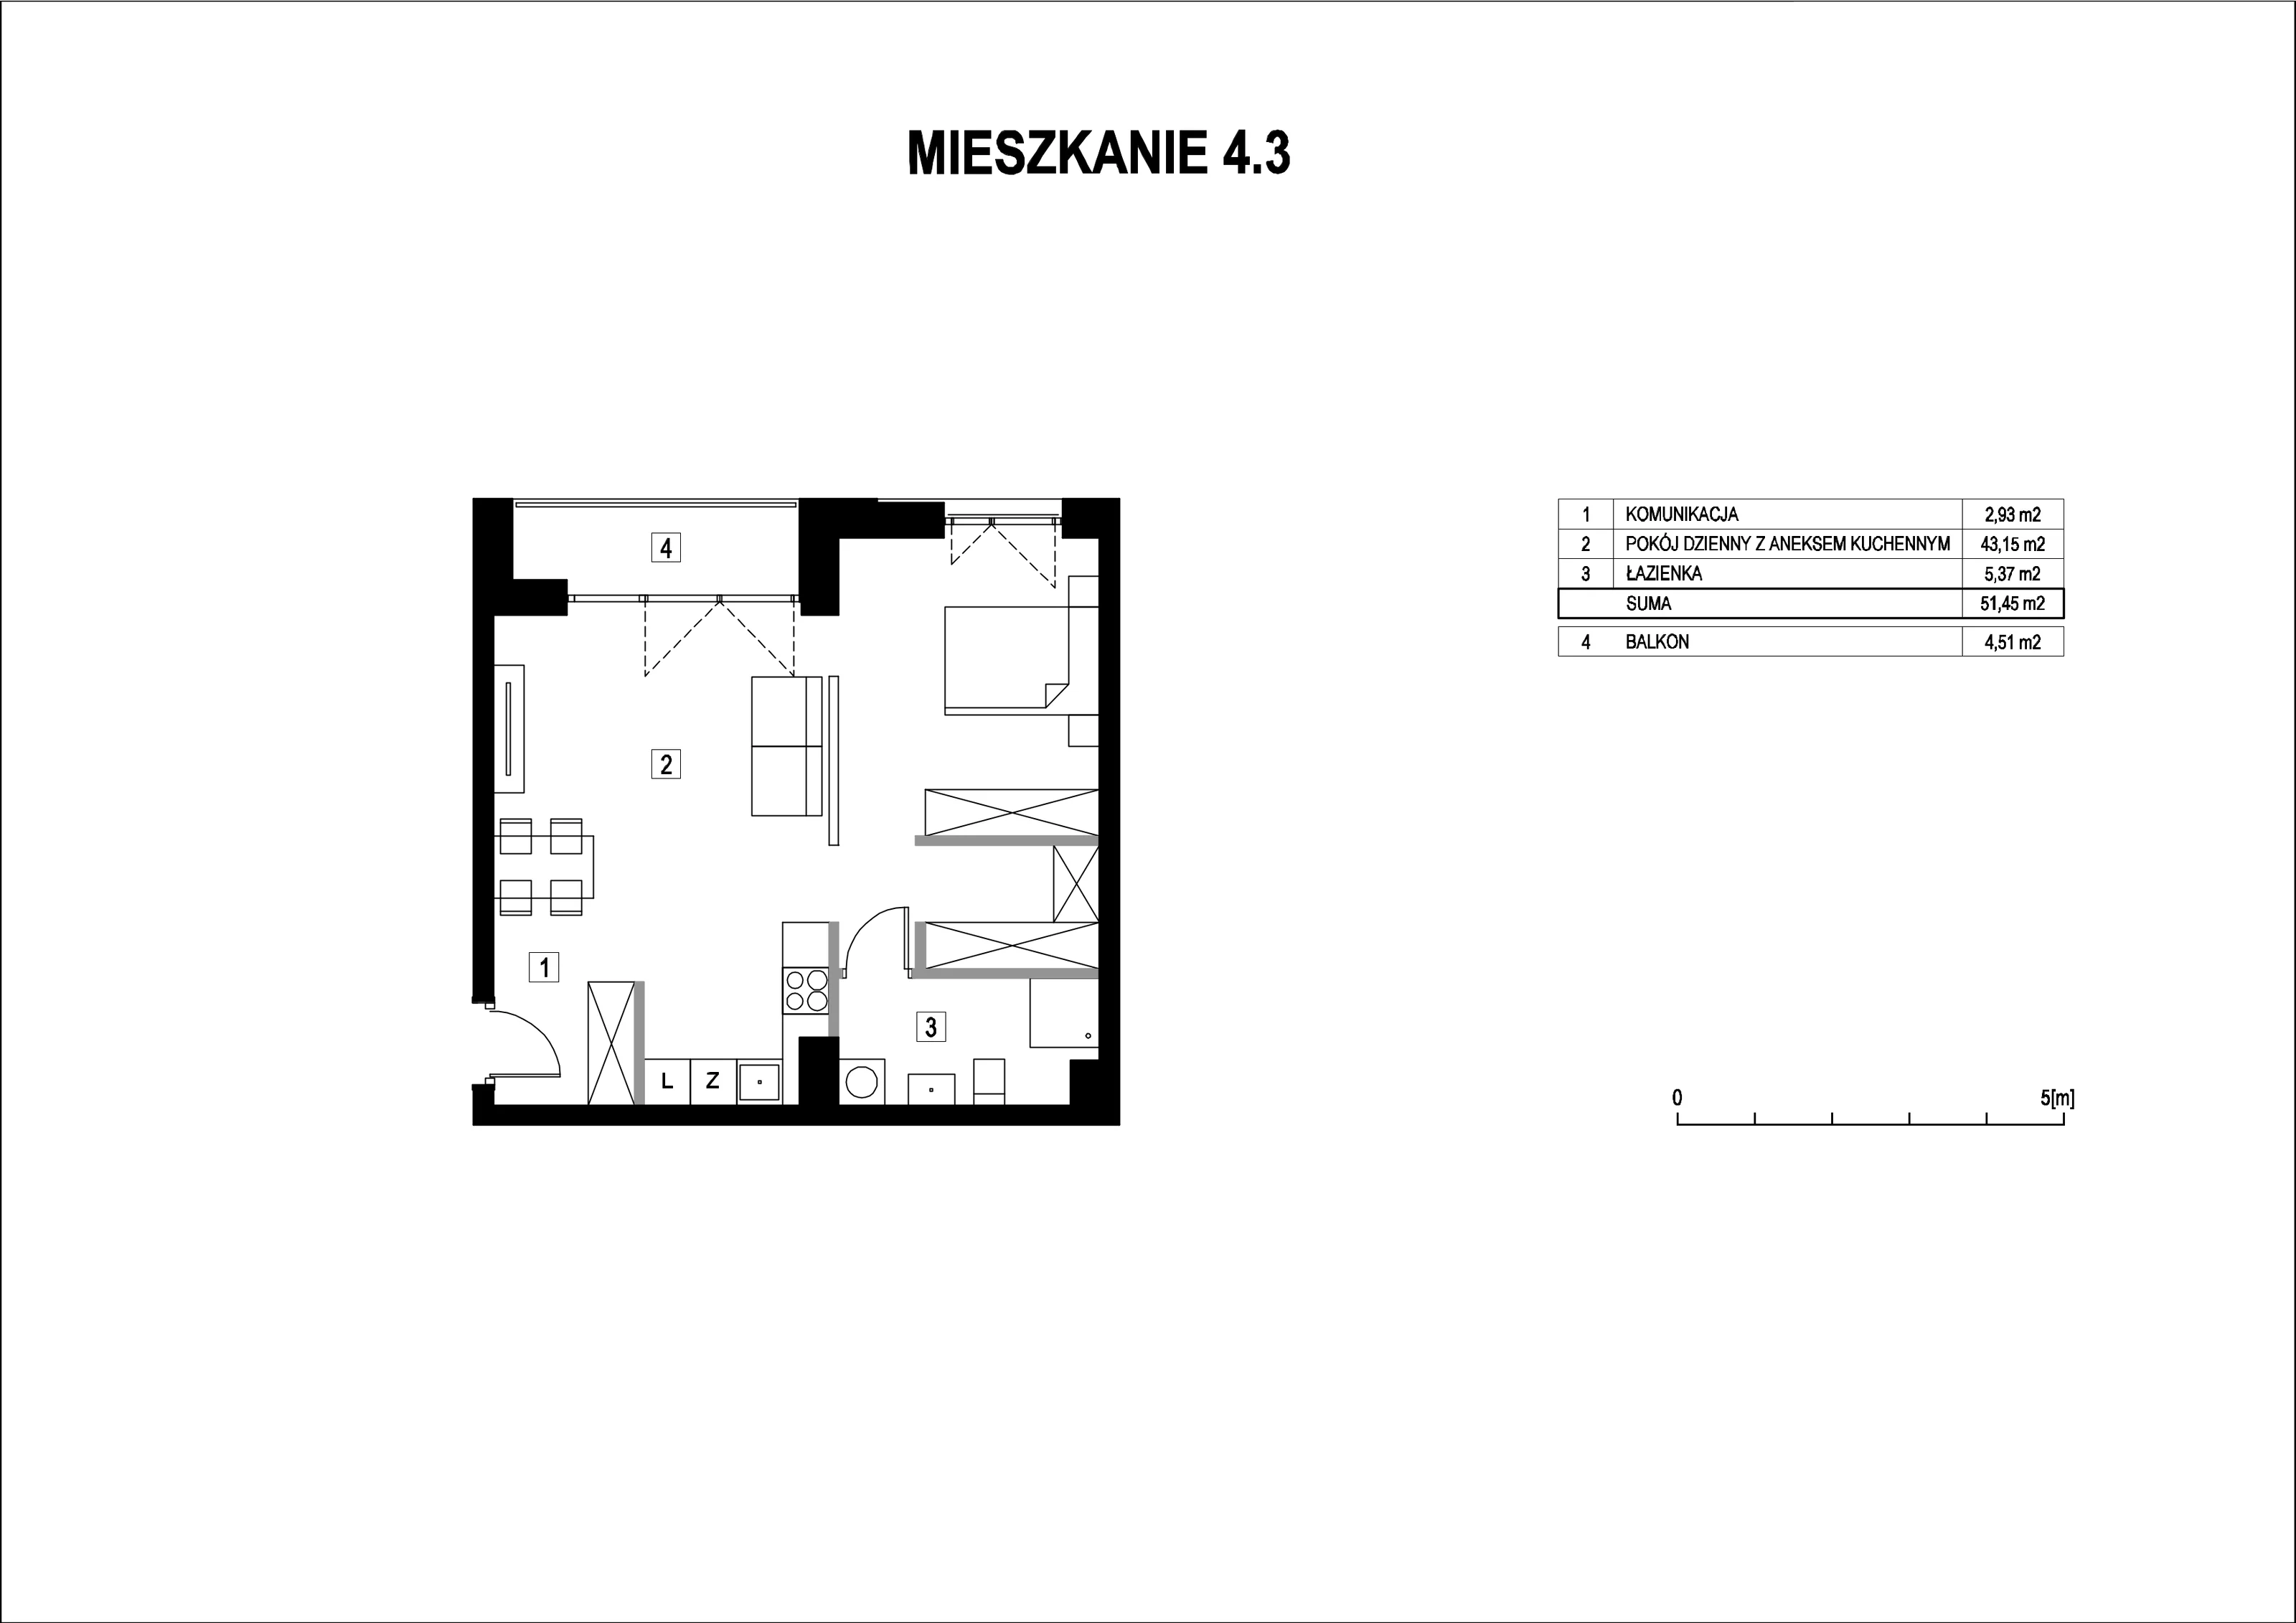 Mieszkanie 51,45 m², piętro 4, oferta nr M4_3, La Vie Art, Łódź, Polesie, ul. 6 Sierpnia 10